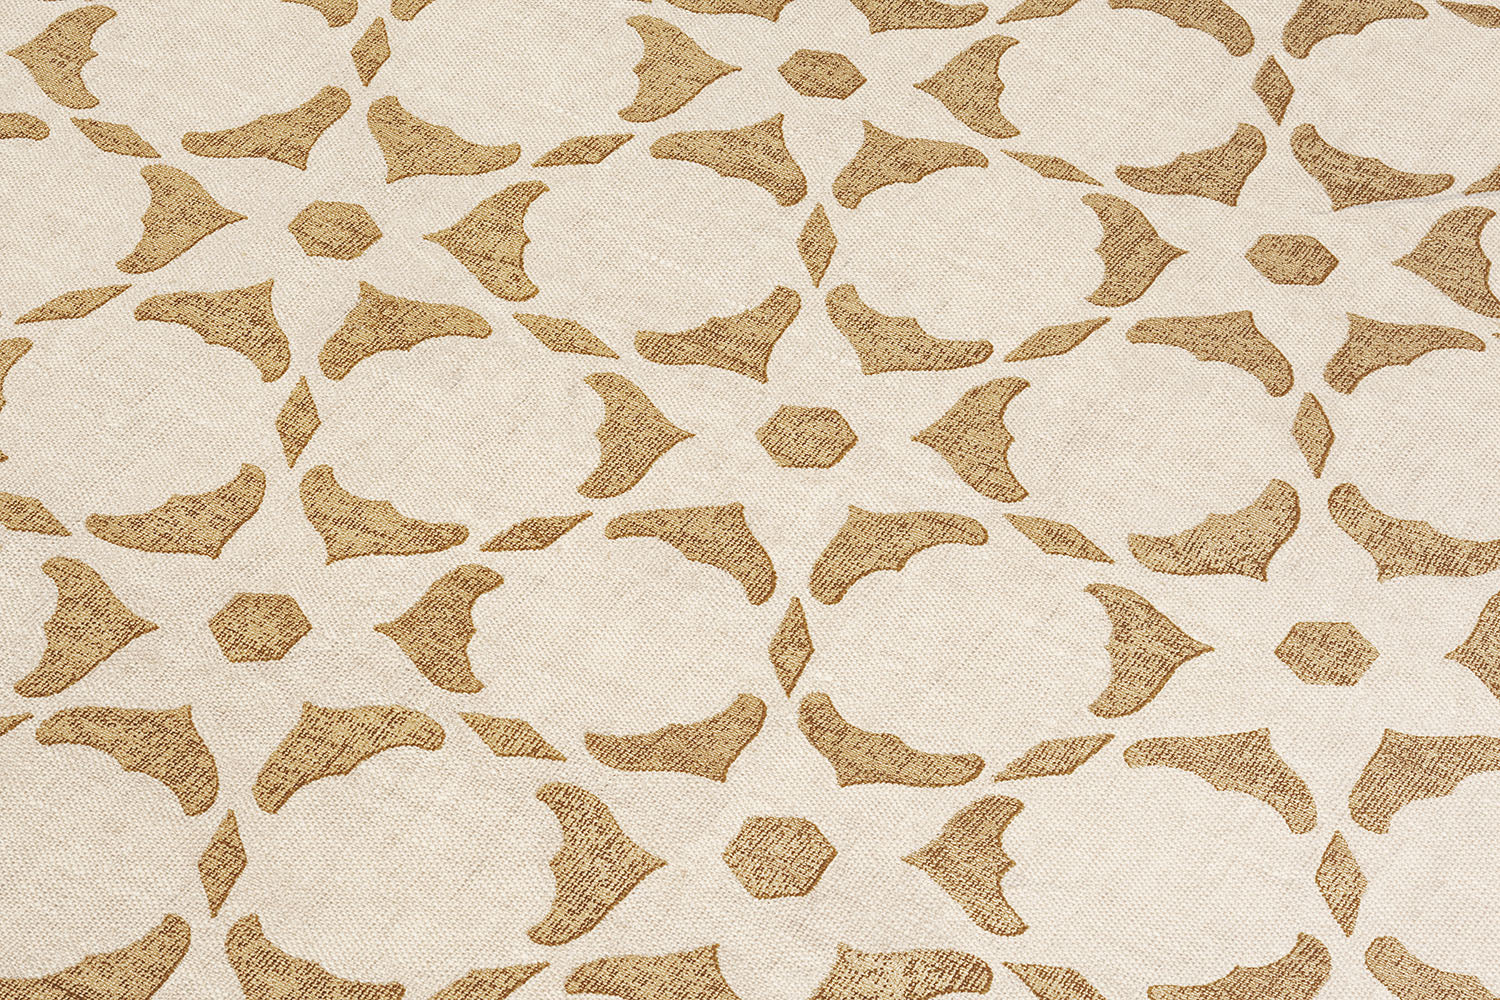 Fabric yardage in a floral lattice print in bronze on a cream field.